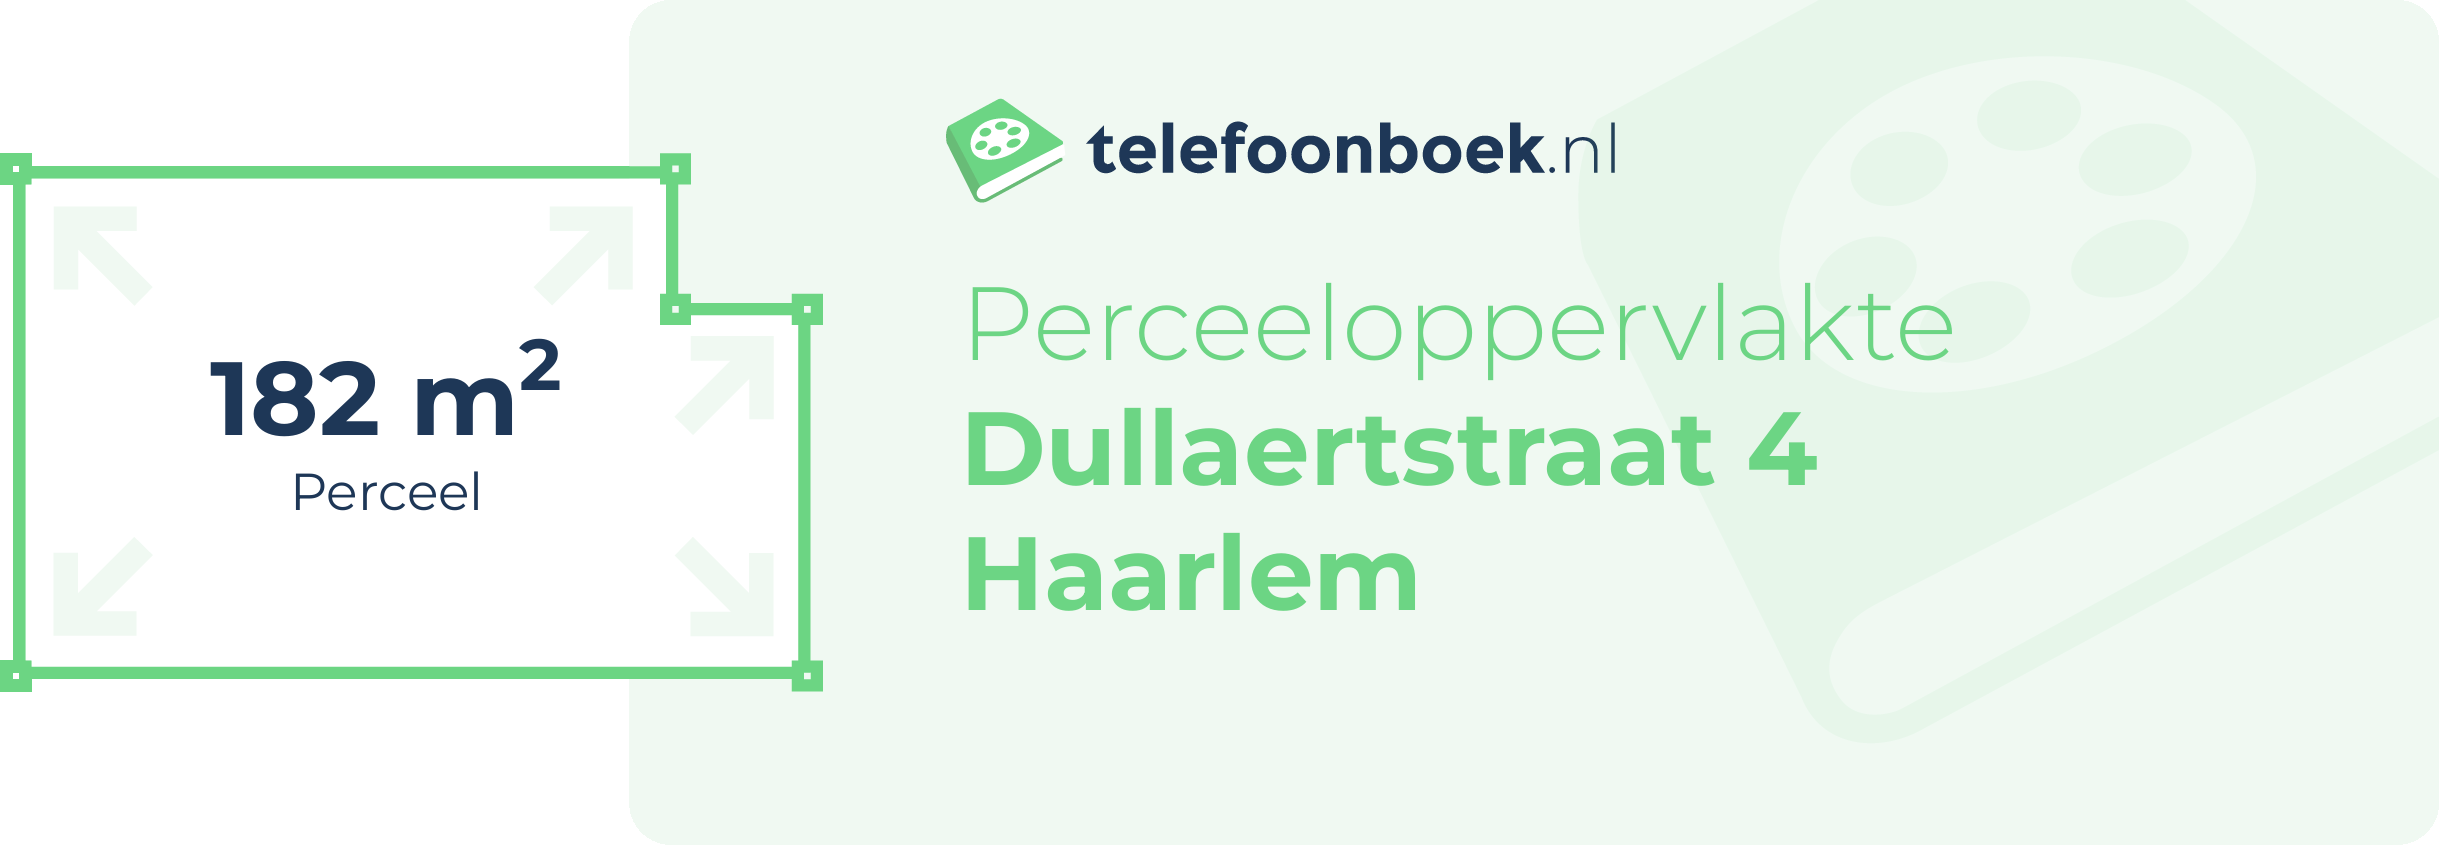 Perceeloppervlakte Dullaertstraat 4 Haarlem